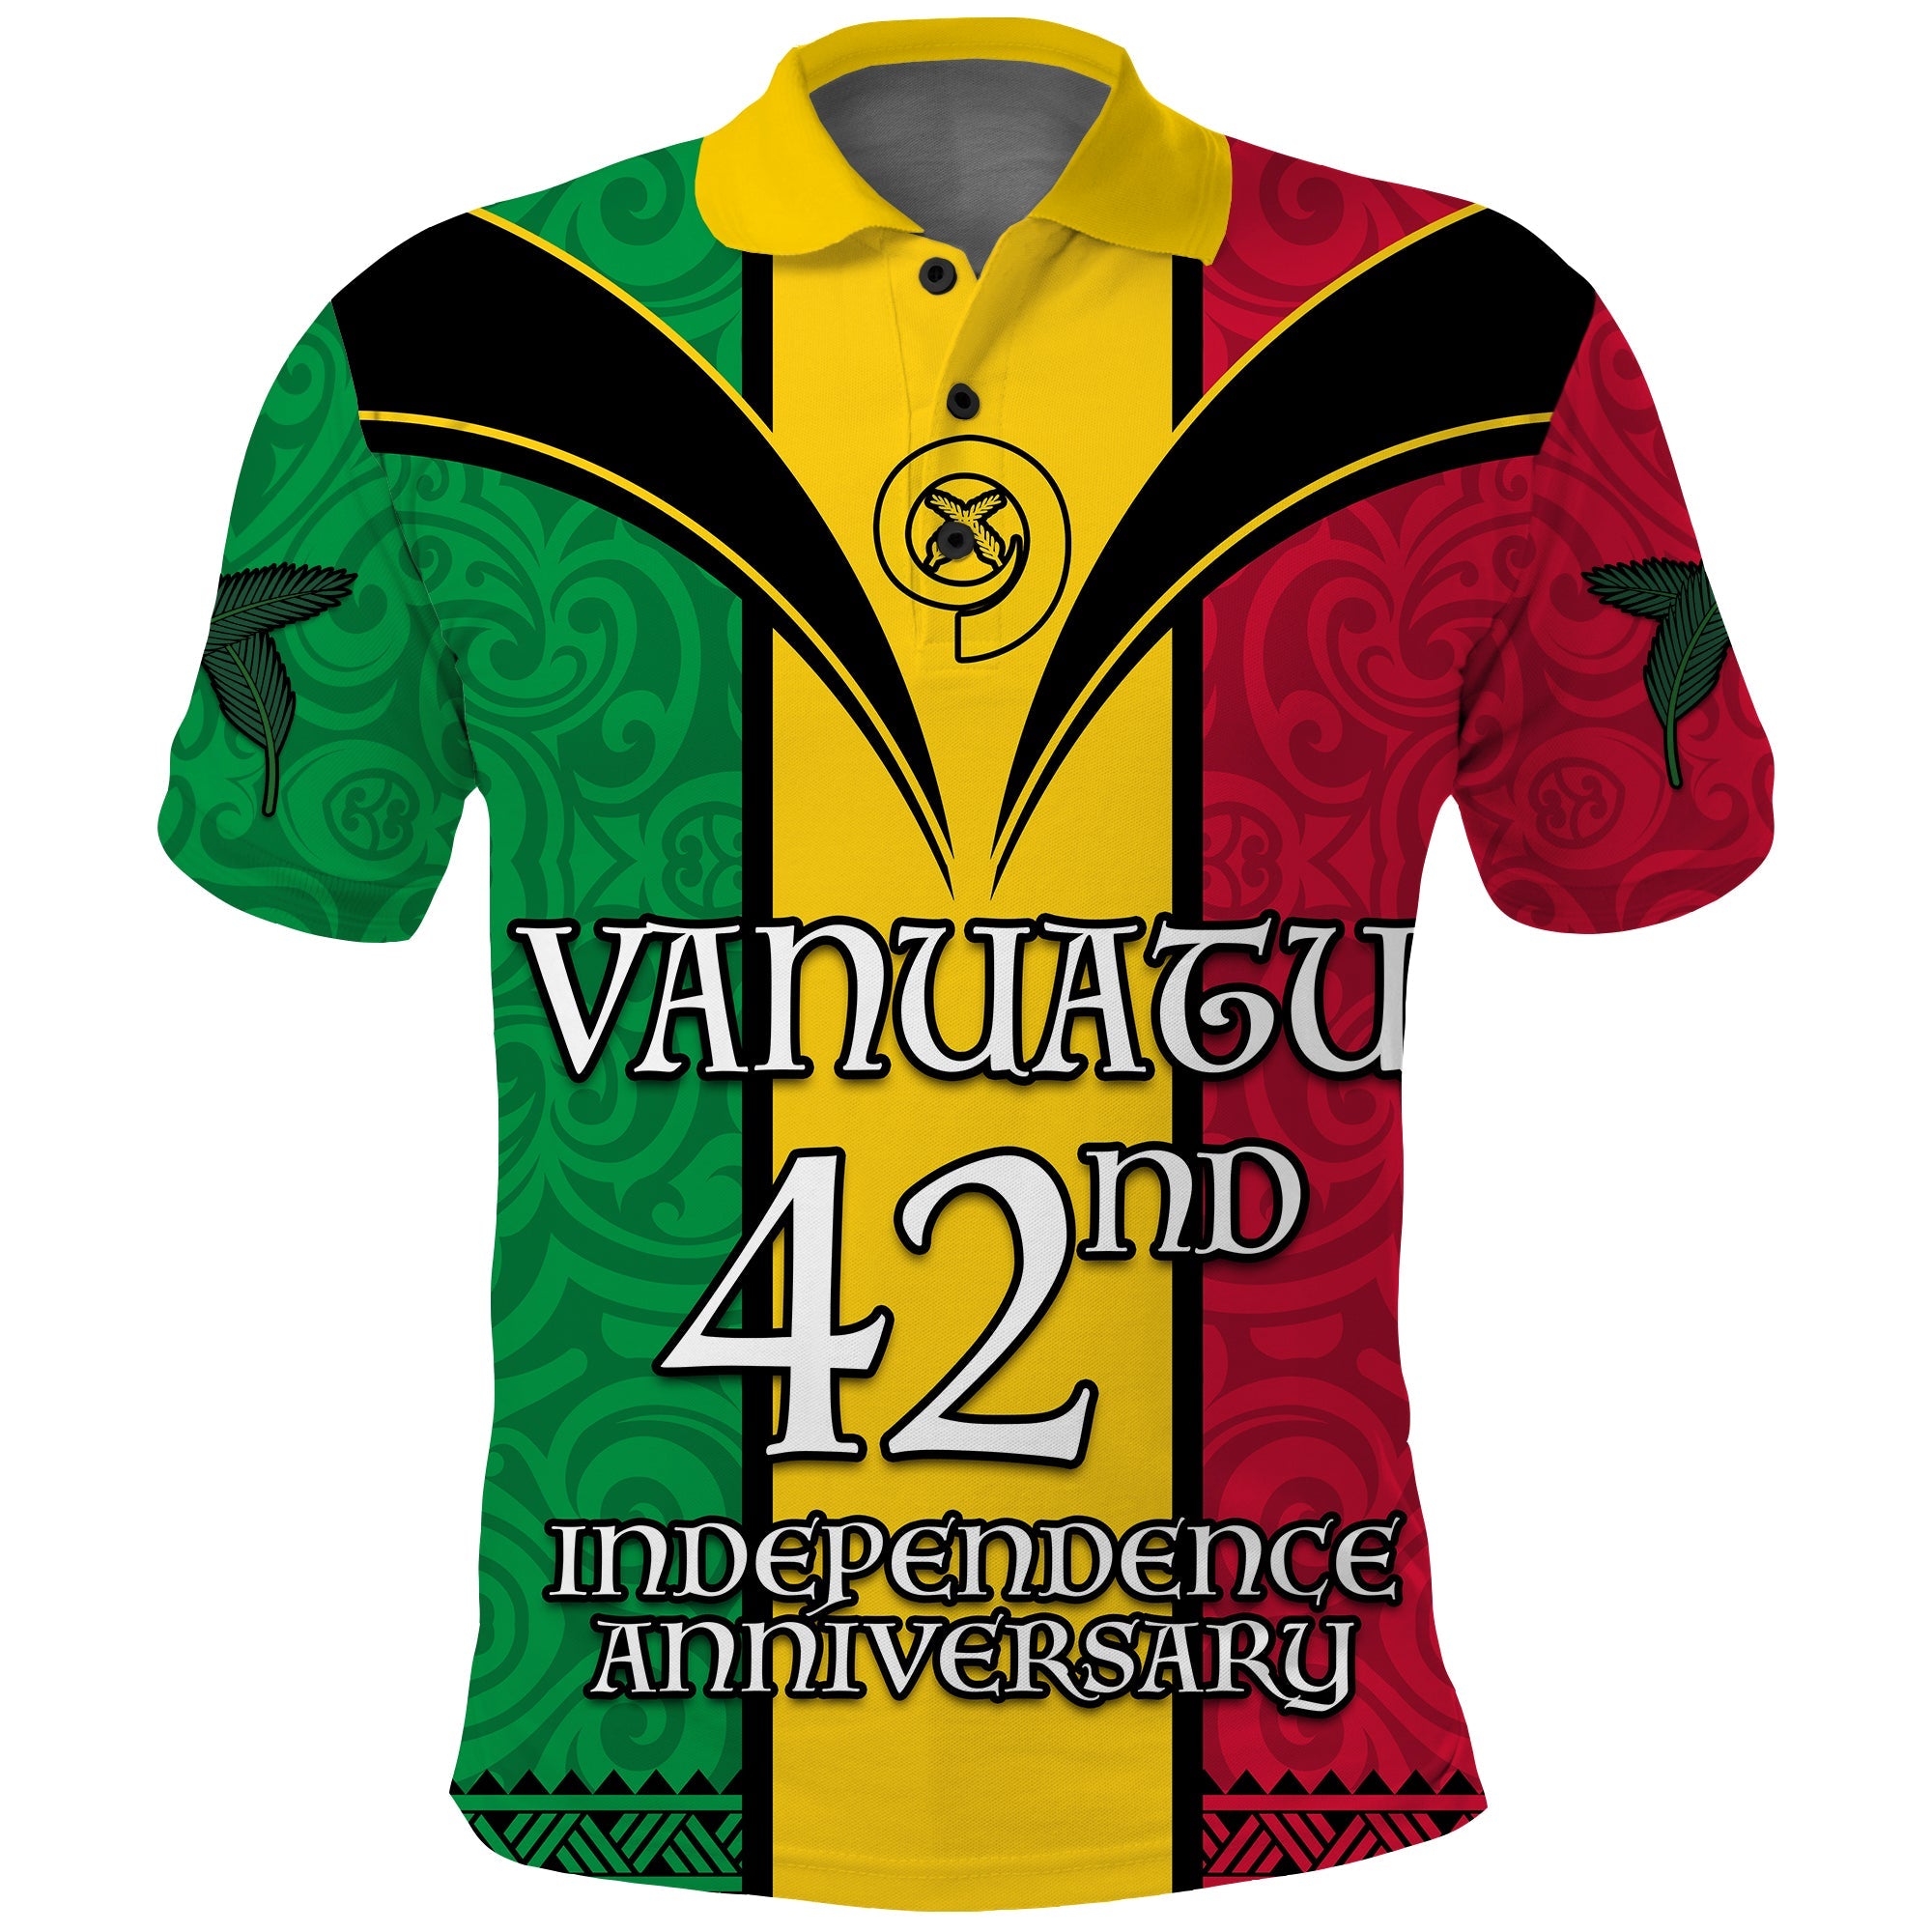 Vanuatu 1980 Polo Shirt Vanuatuan Independence Day LT13 Yellow - Polynesian Pride